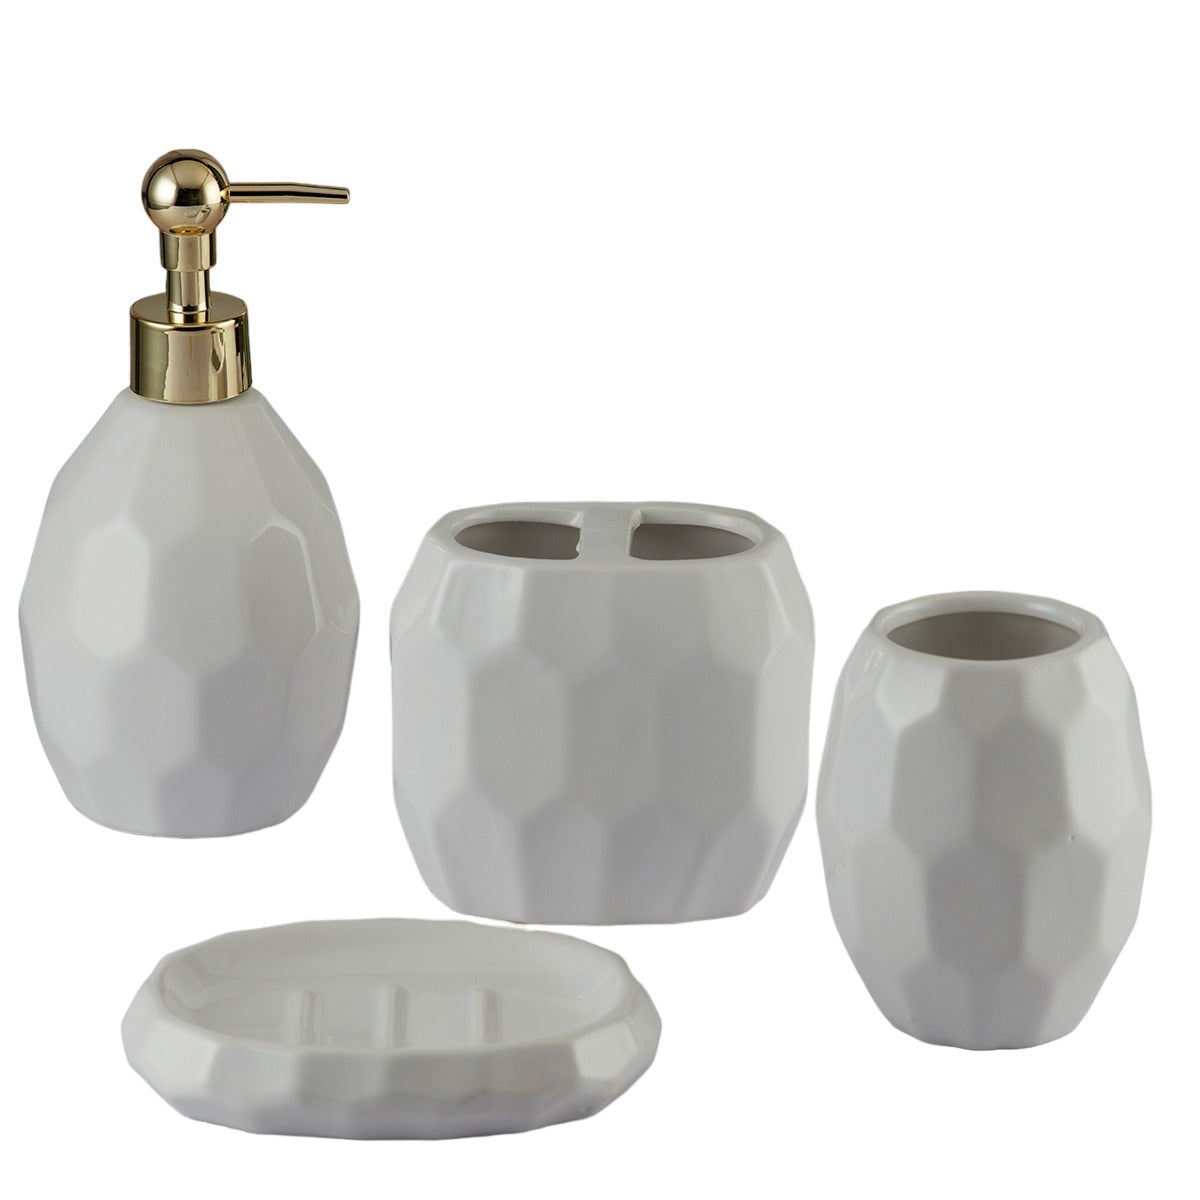 Ceramic Bathroom Accessories Set of 4 Bath Set with Soap Dispenser (8108)